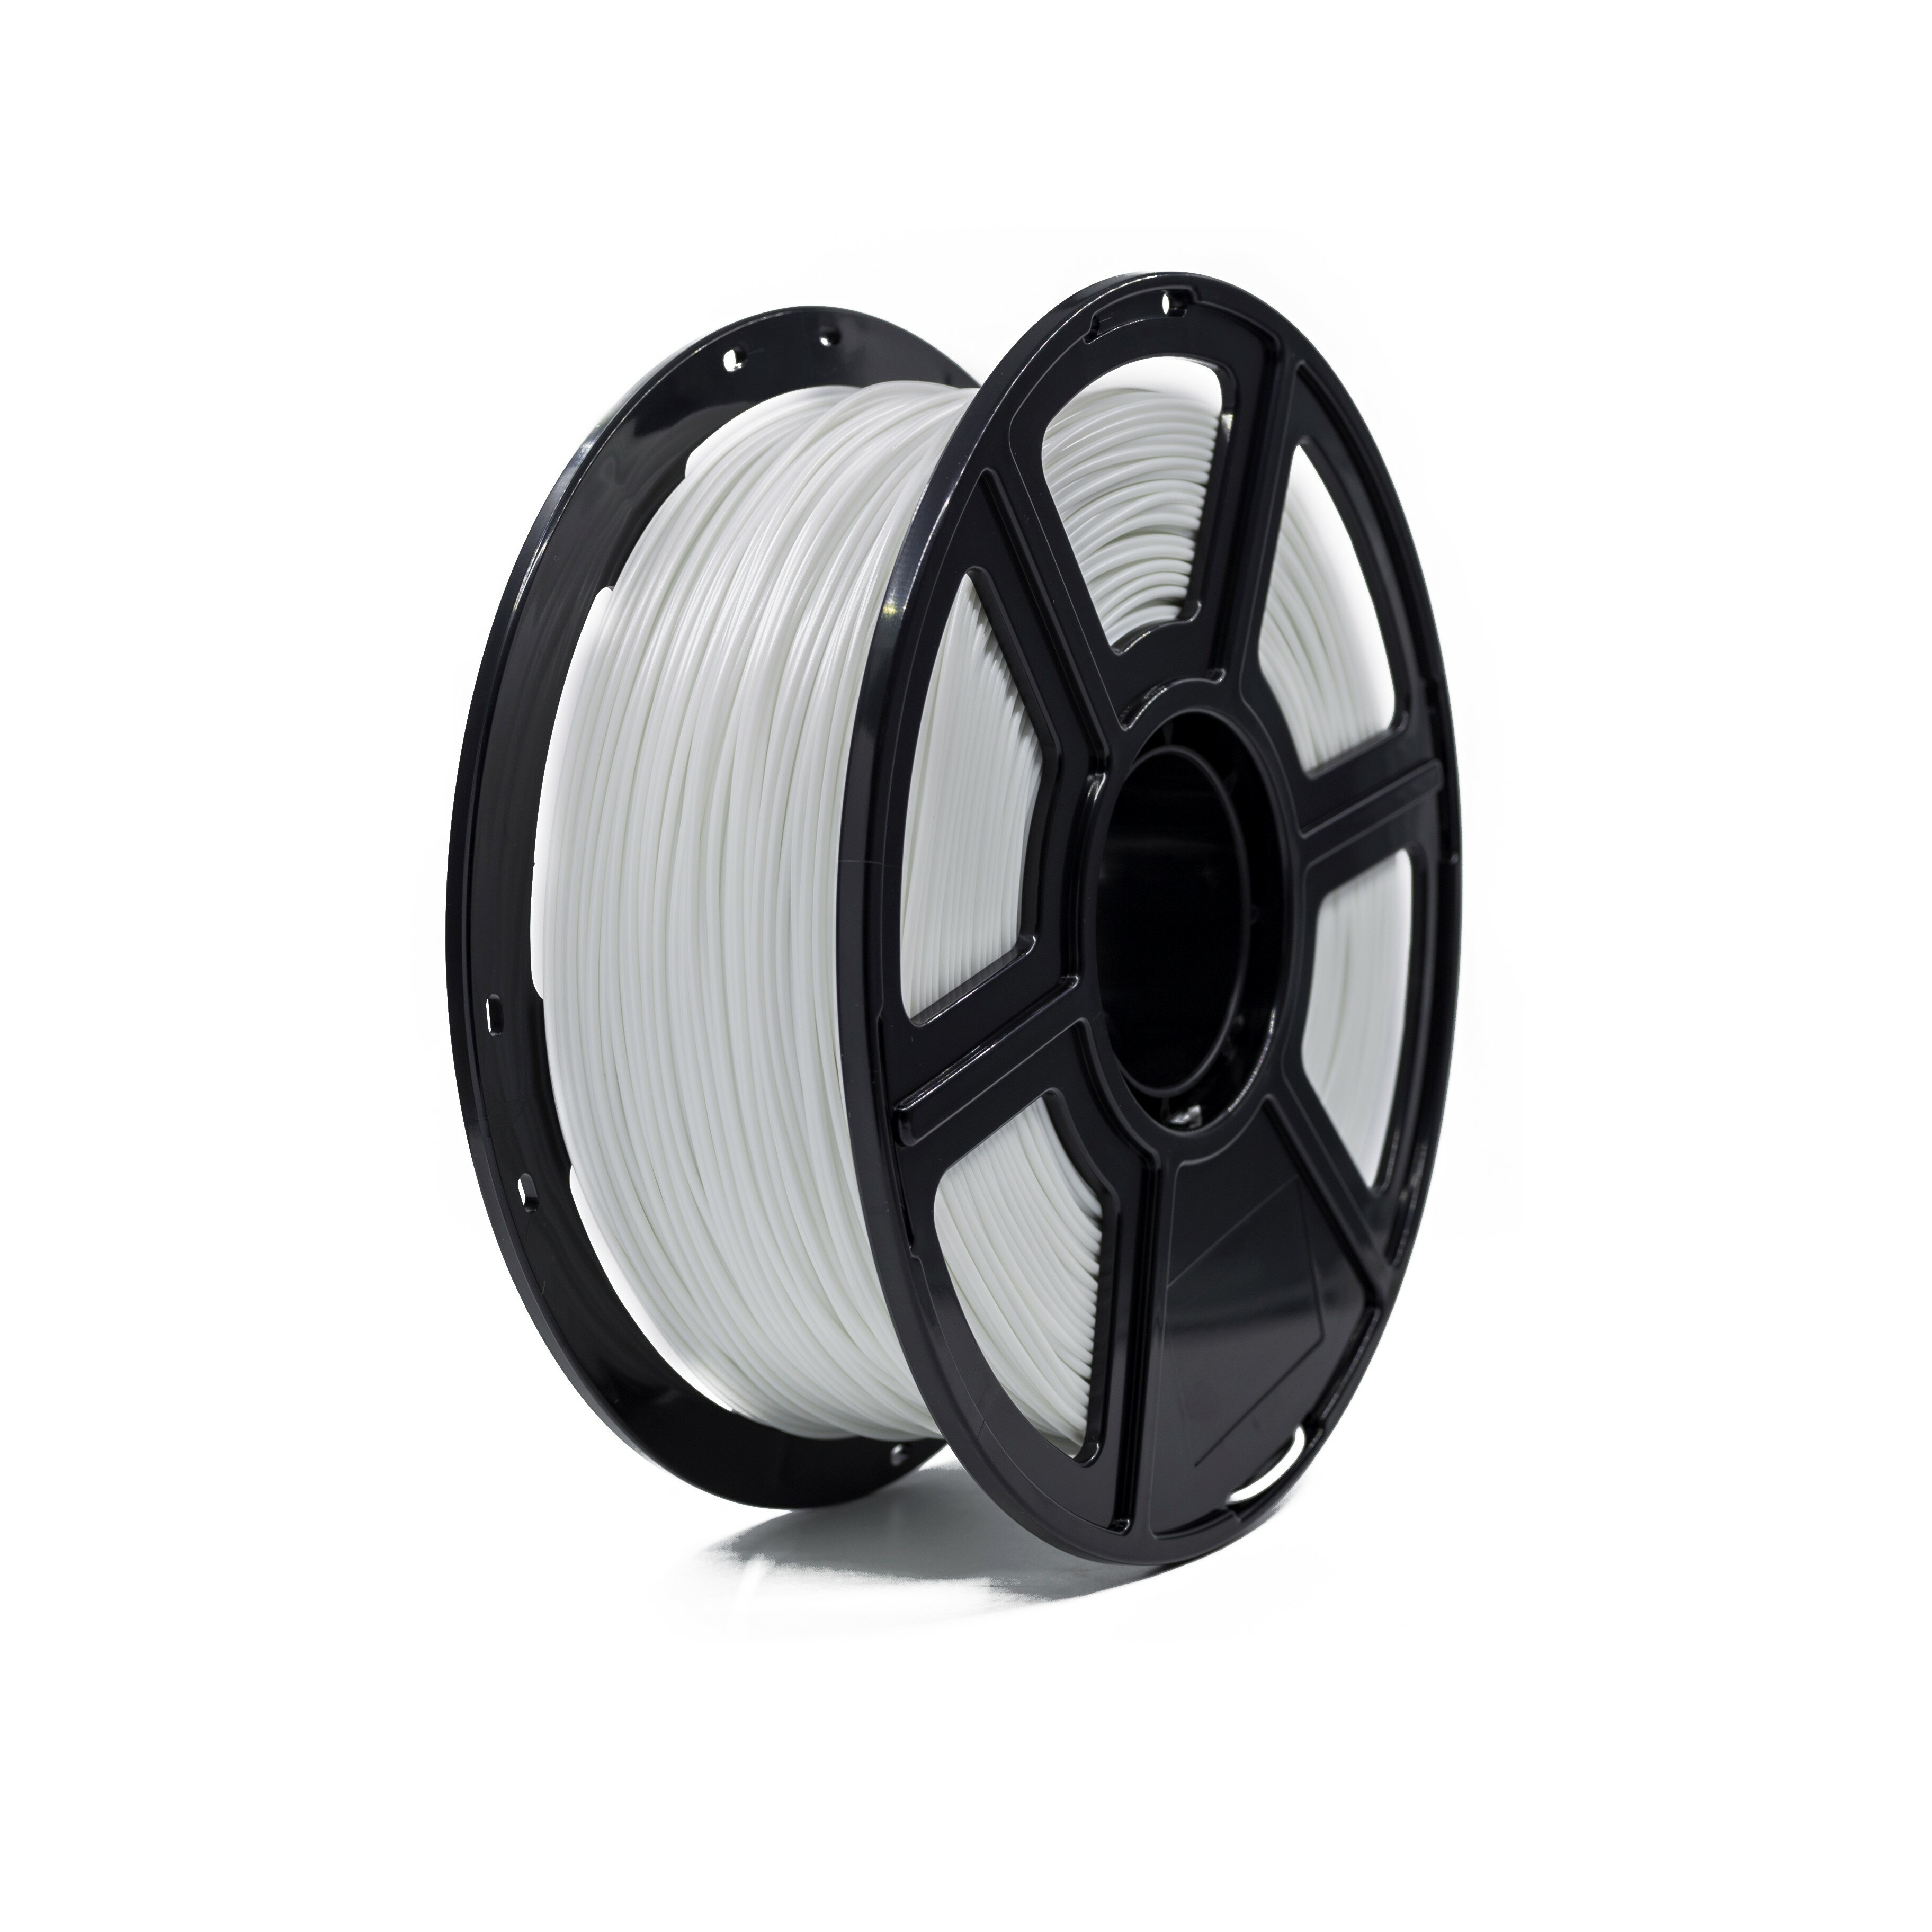 FLASHFORGE フィラメント petg 1.75mm 1000g 3Dプリンター 3d printer PETG filament ホワイト 送料無料 税込